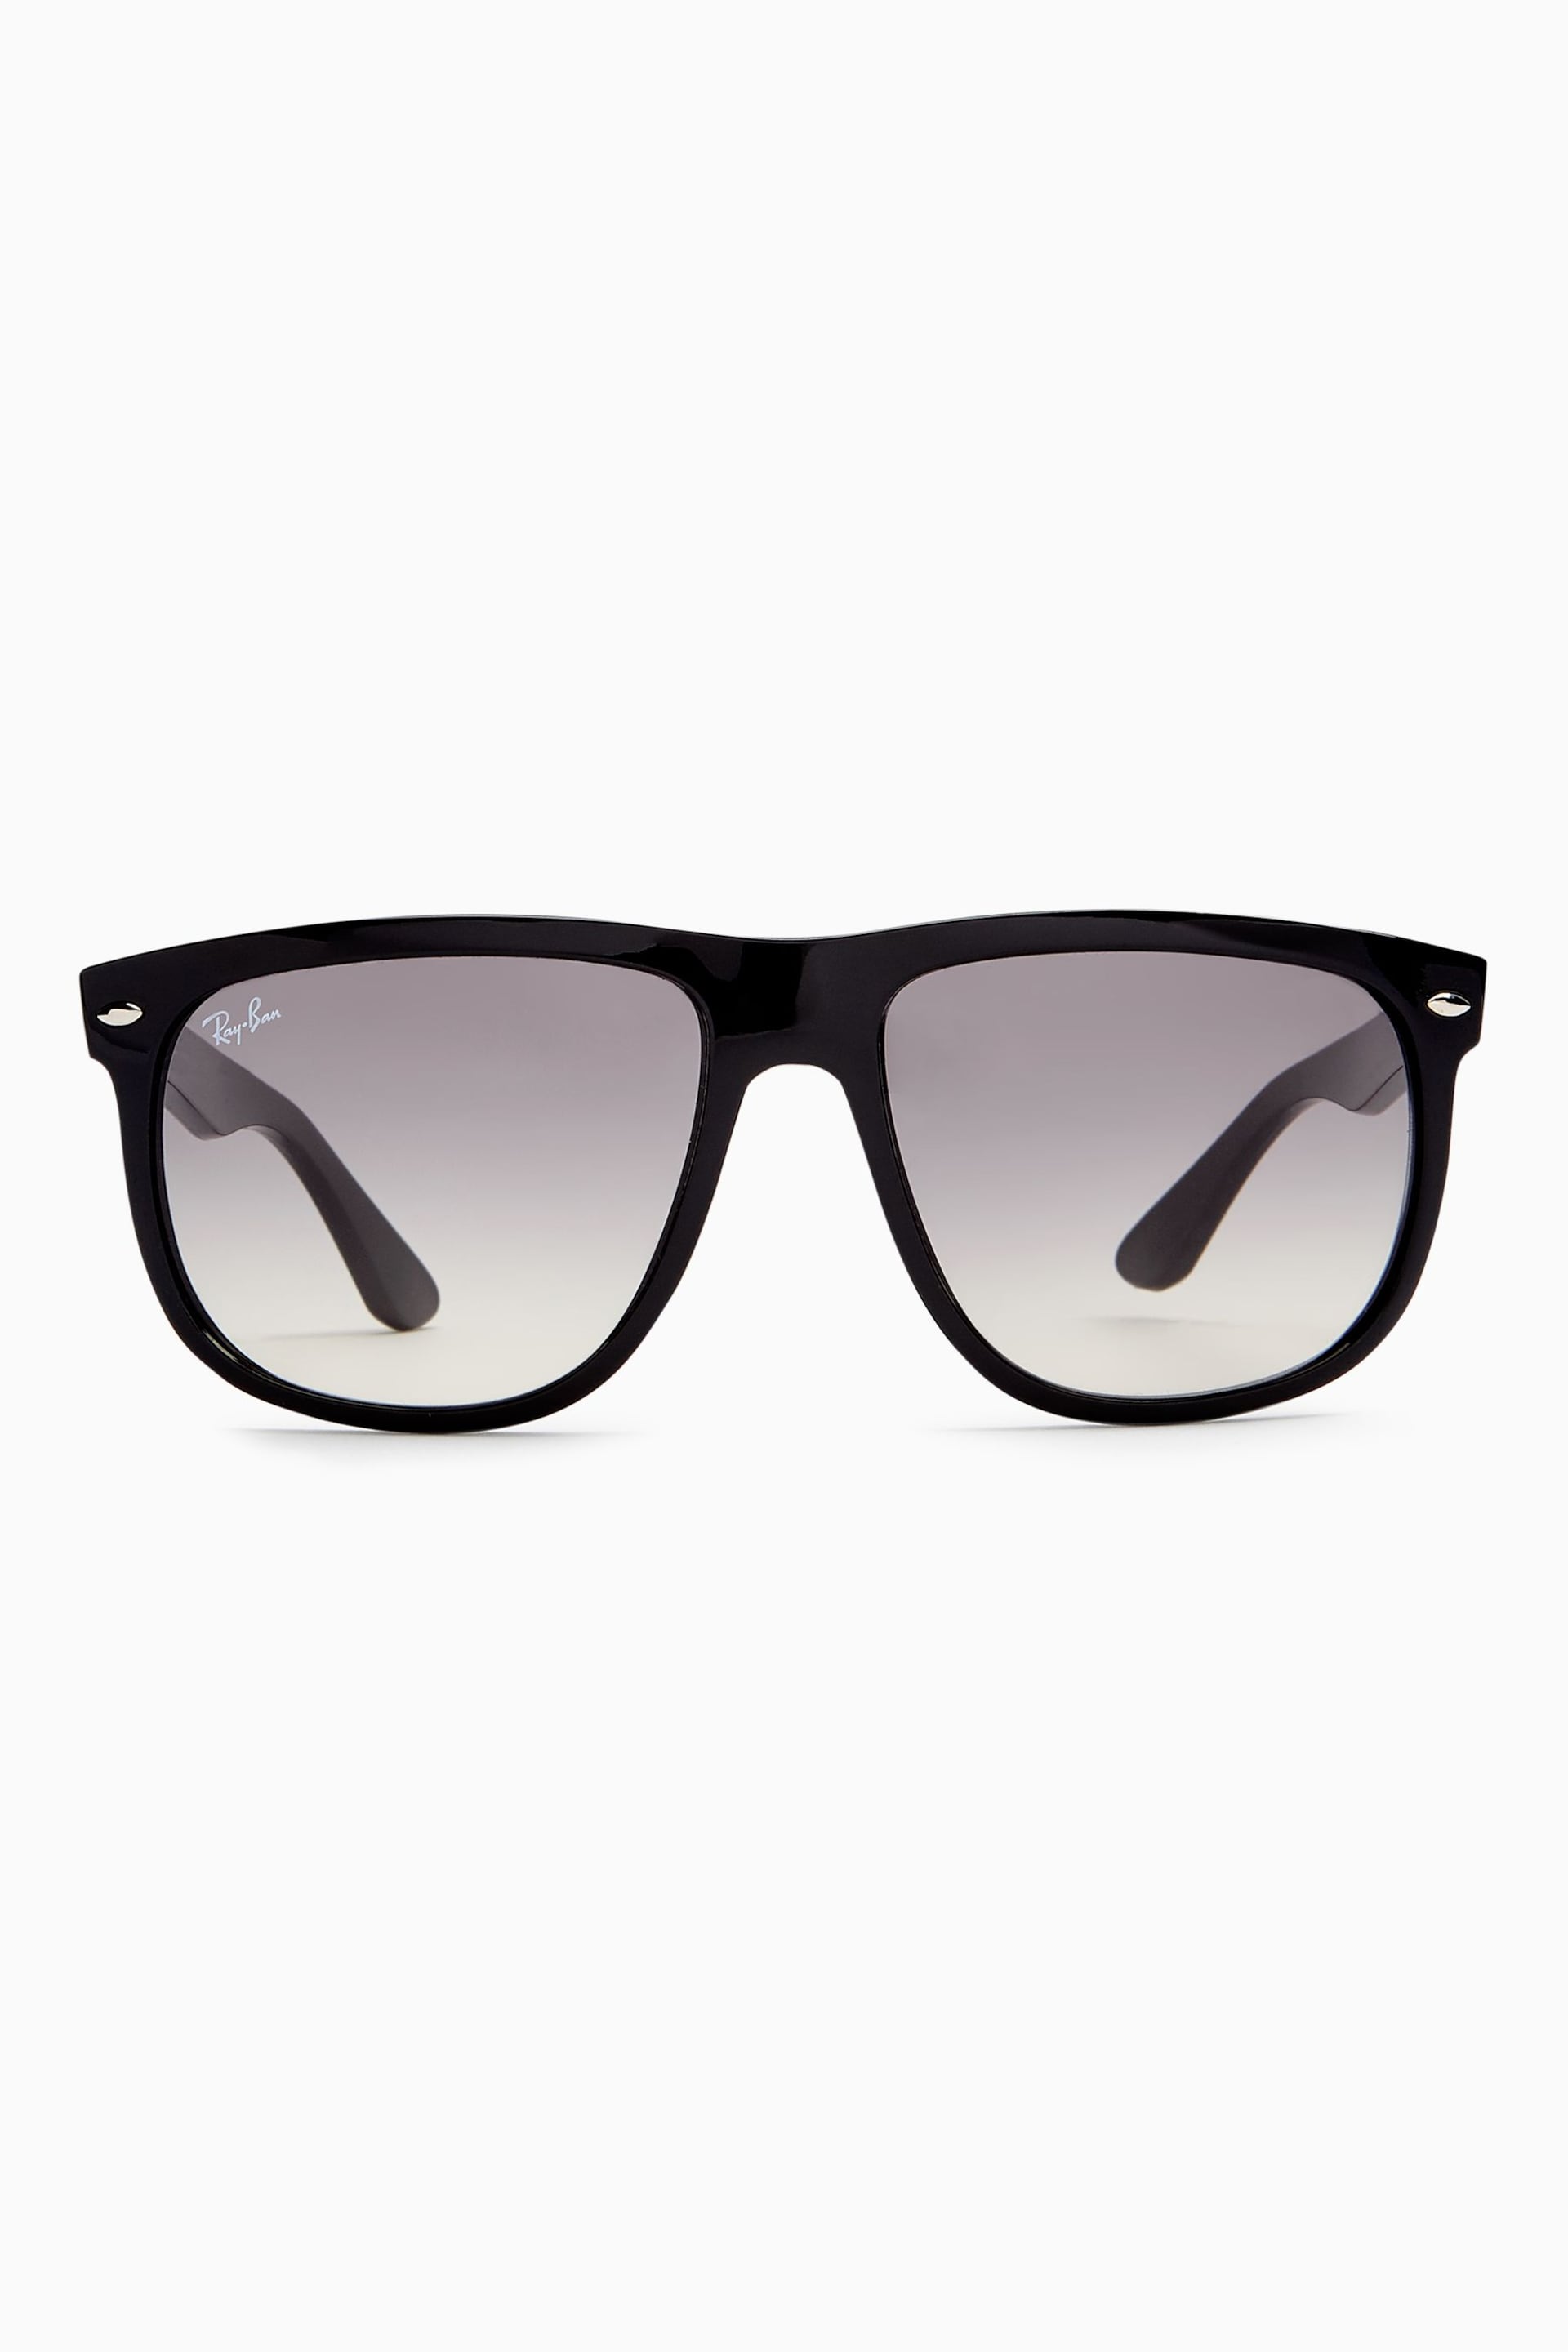 Ray-Ban Sunglasses - Image 13 of 15